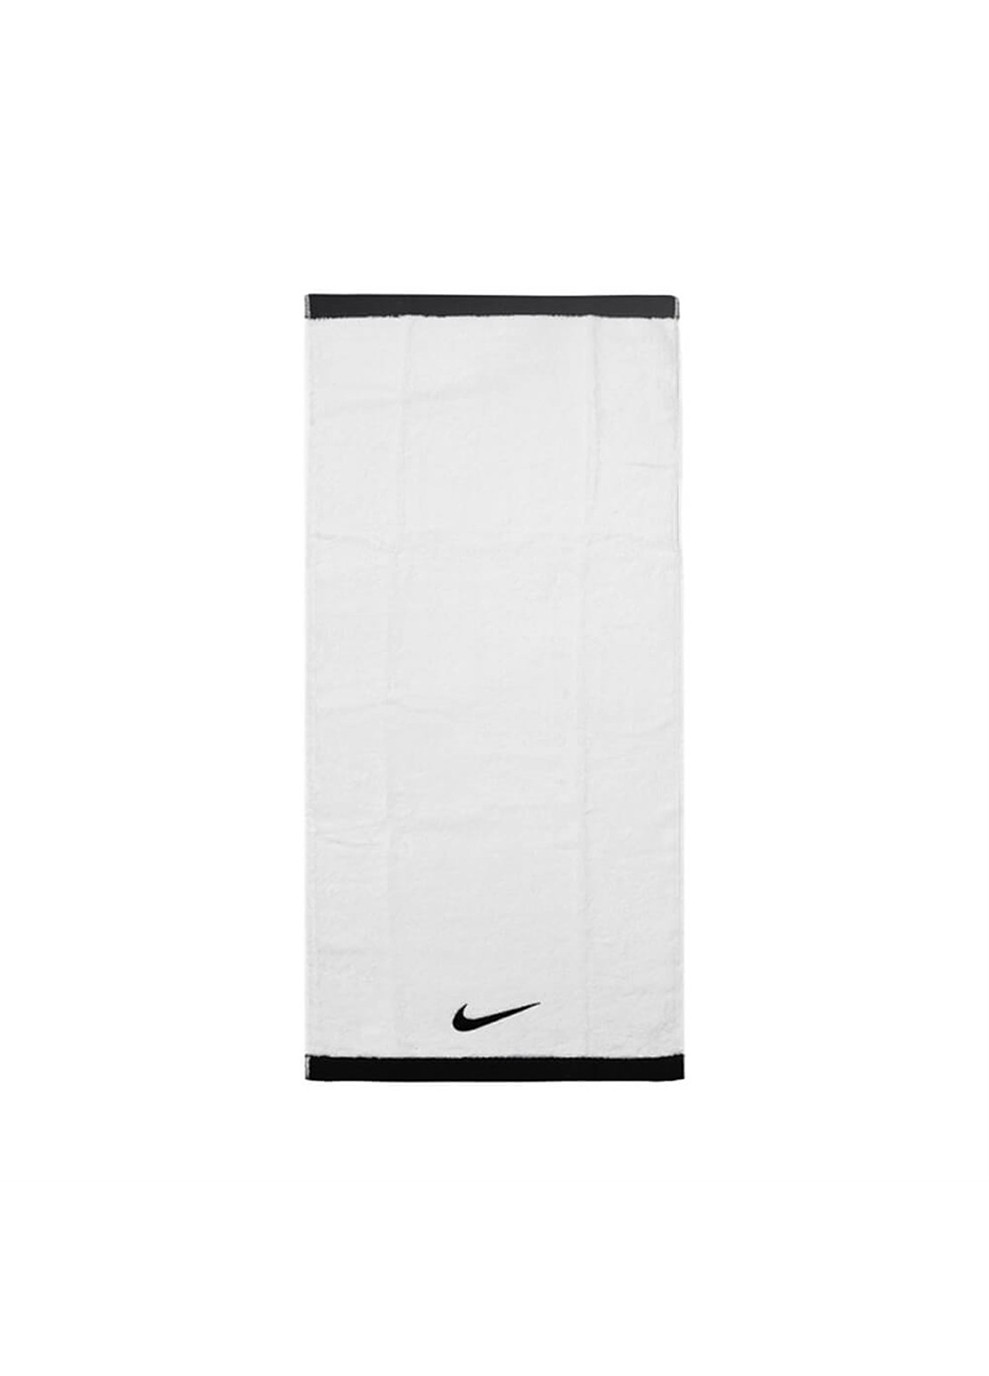 Nike рушник fundamental towel medium white/black - n.et.17.101.md білий виробництво - В'єтнам